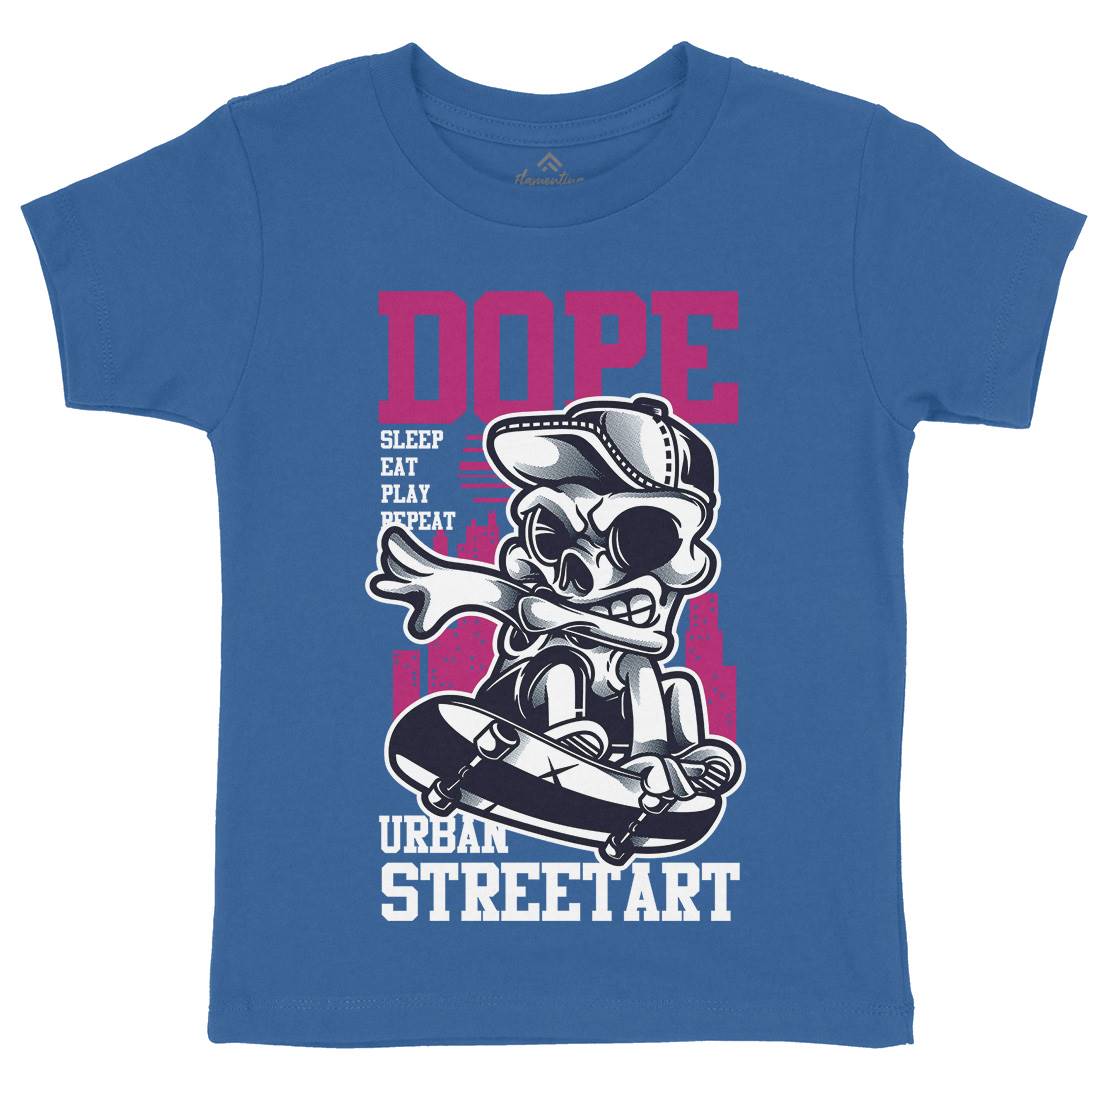 Dope Kids Crew Neck T-Shirt Skate D758